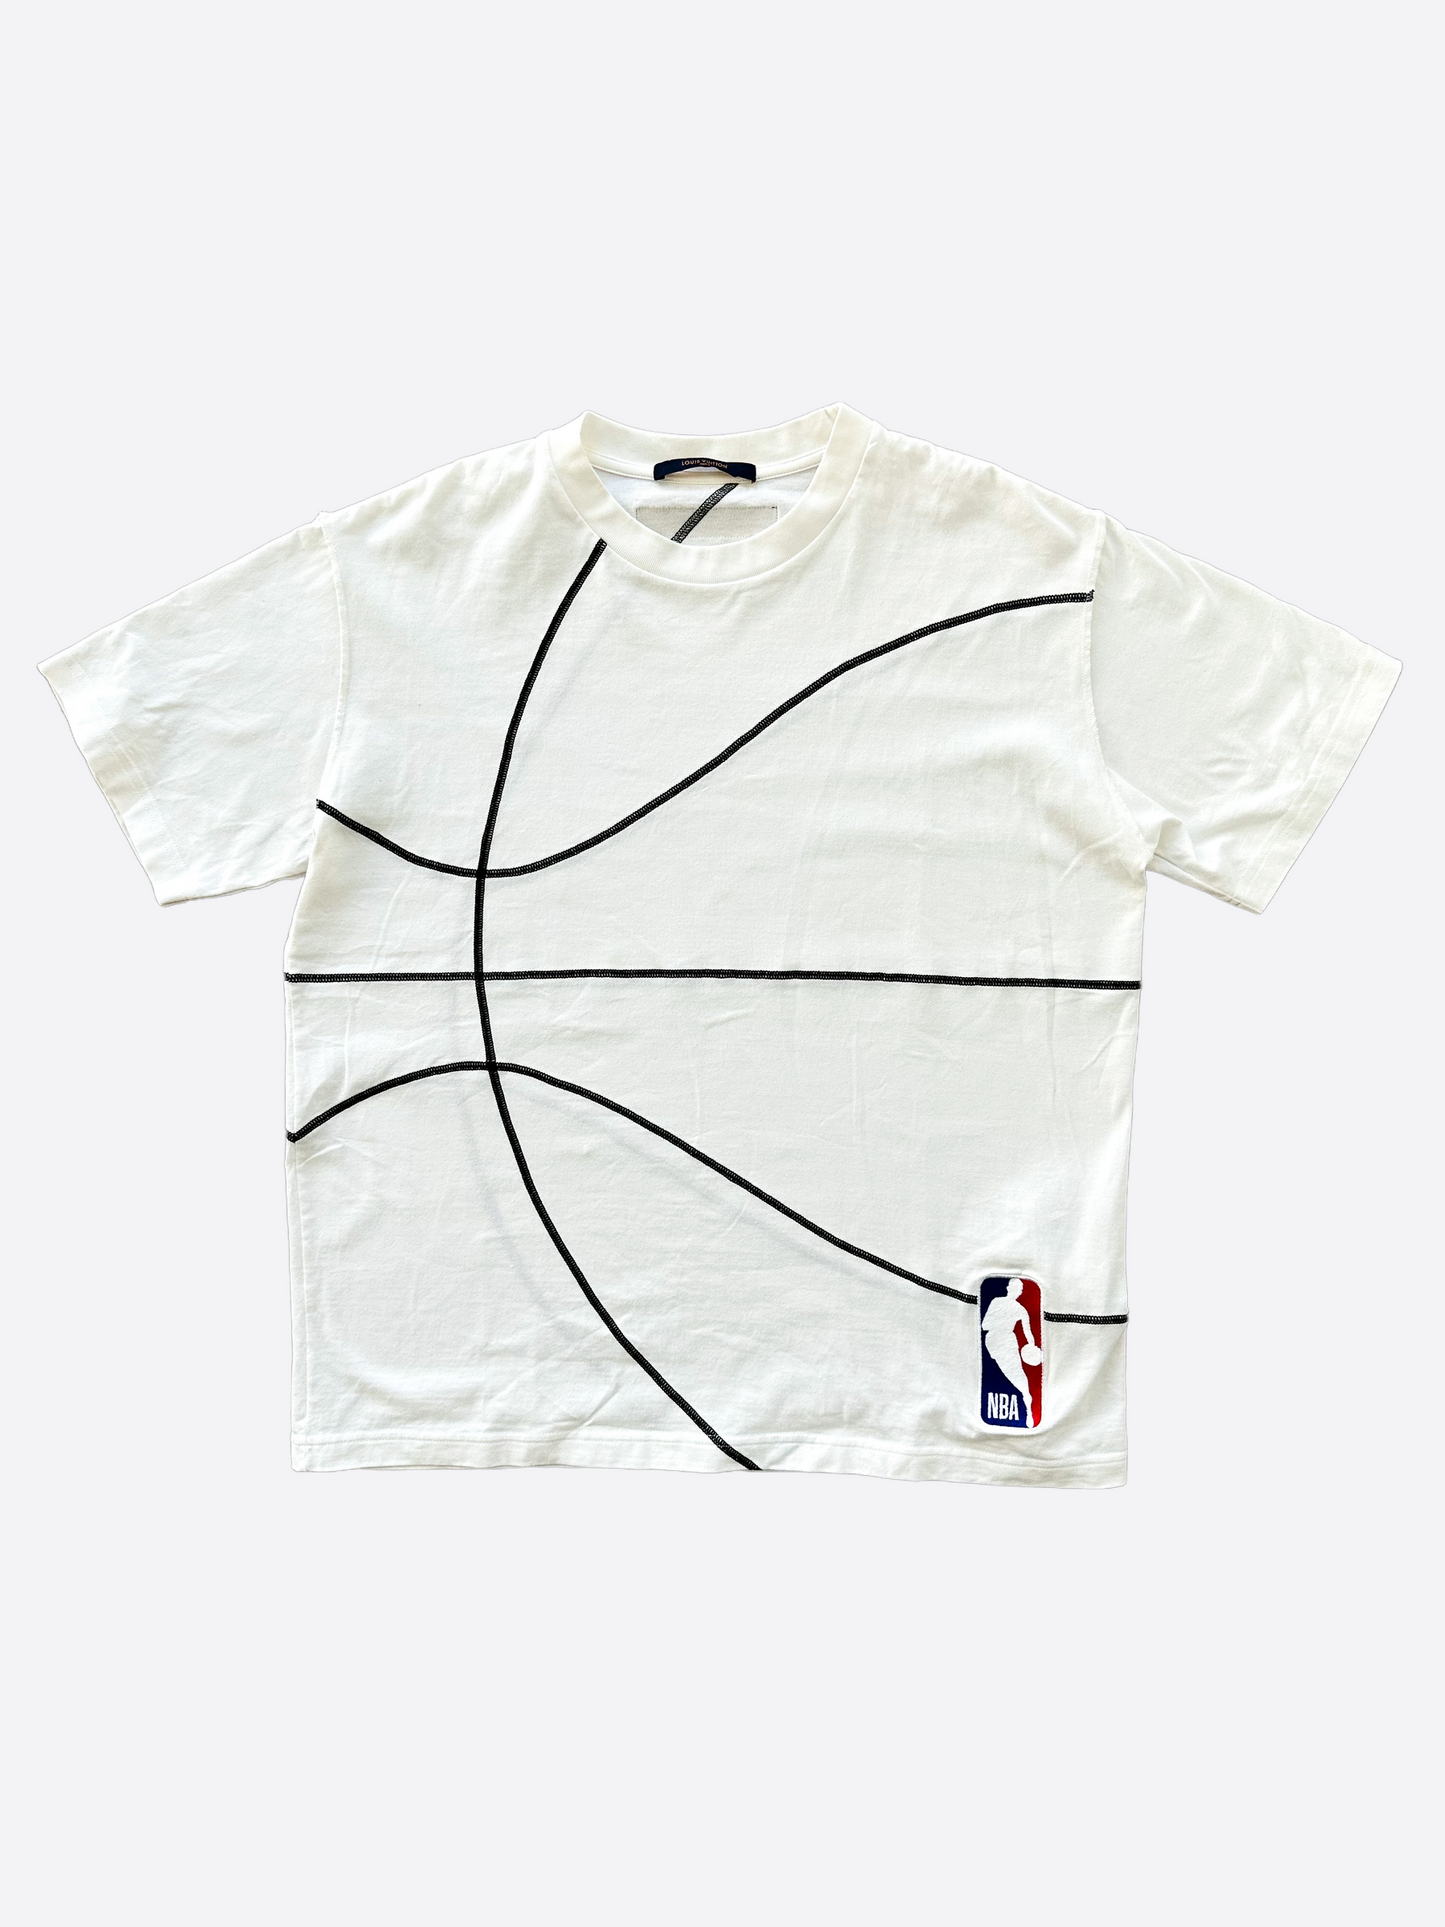 Louis Vuitton NBA Basketball Embroidered Tee